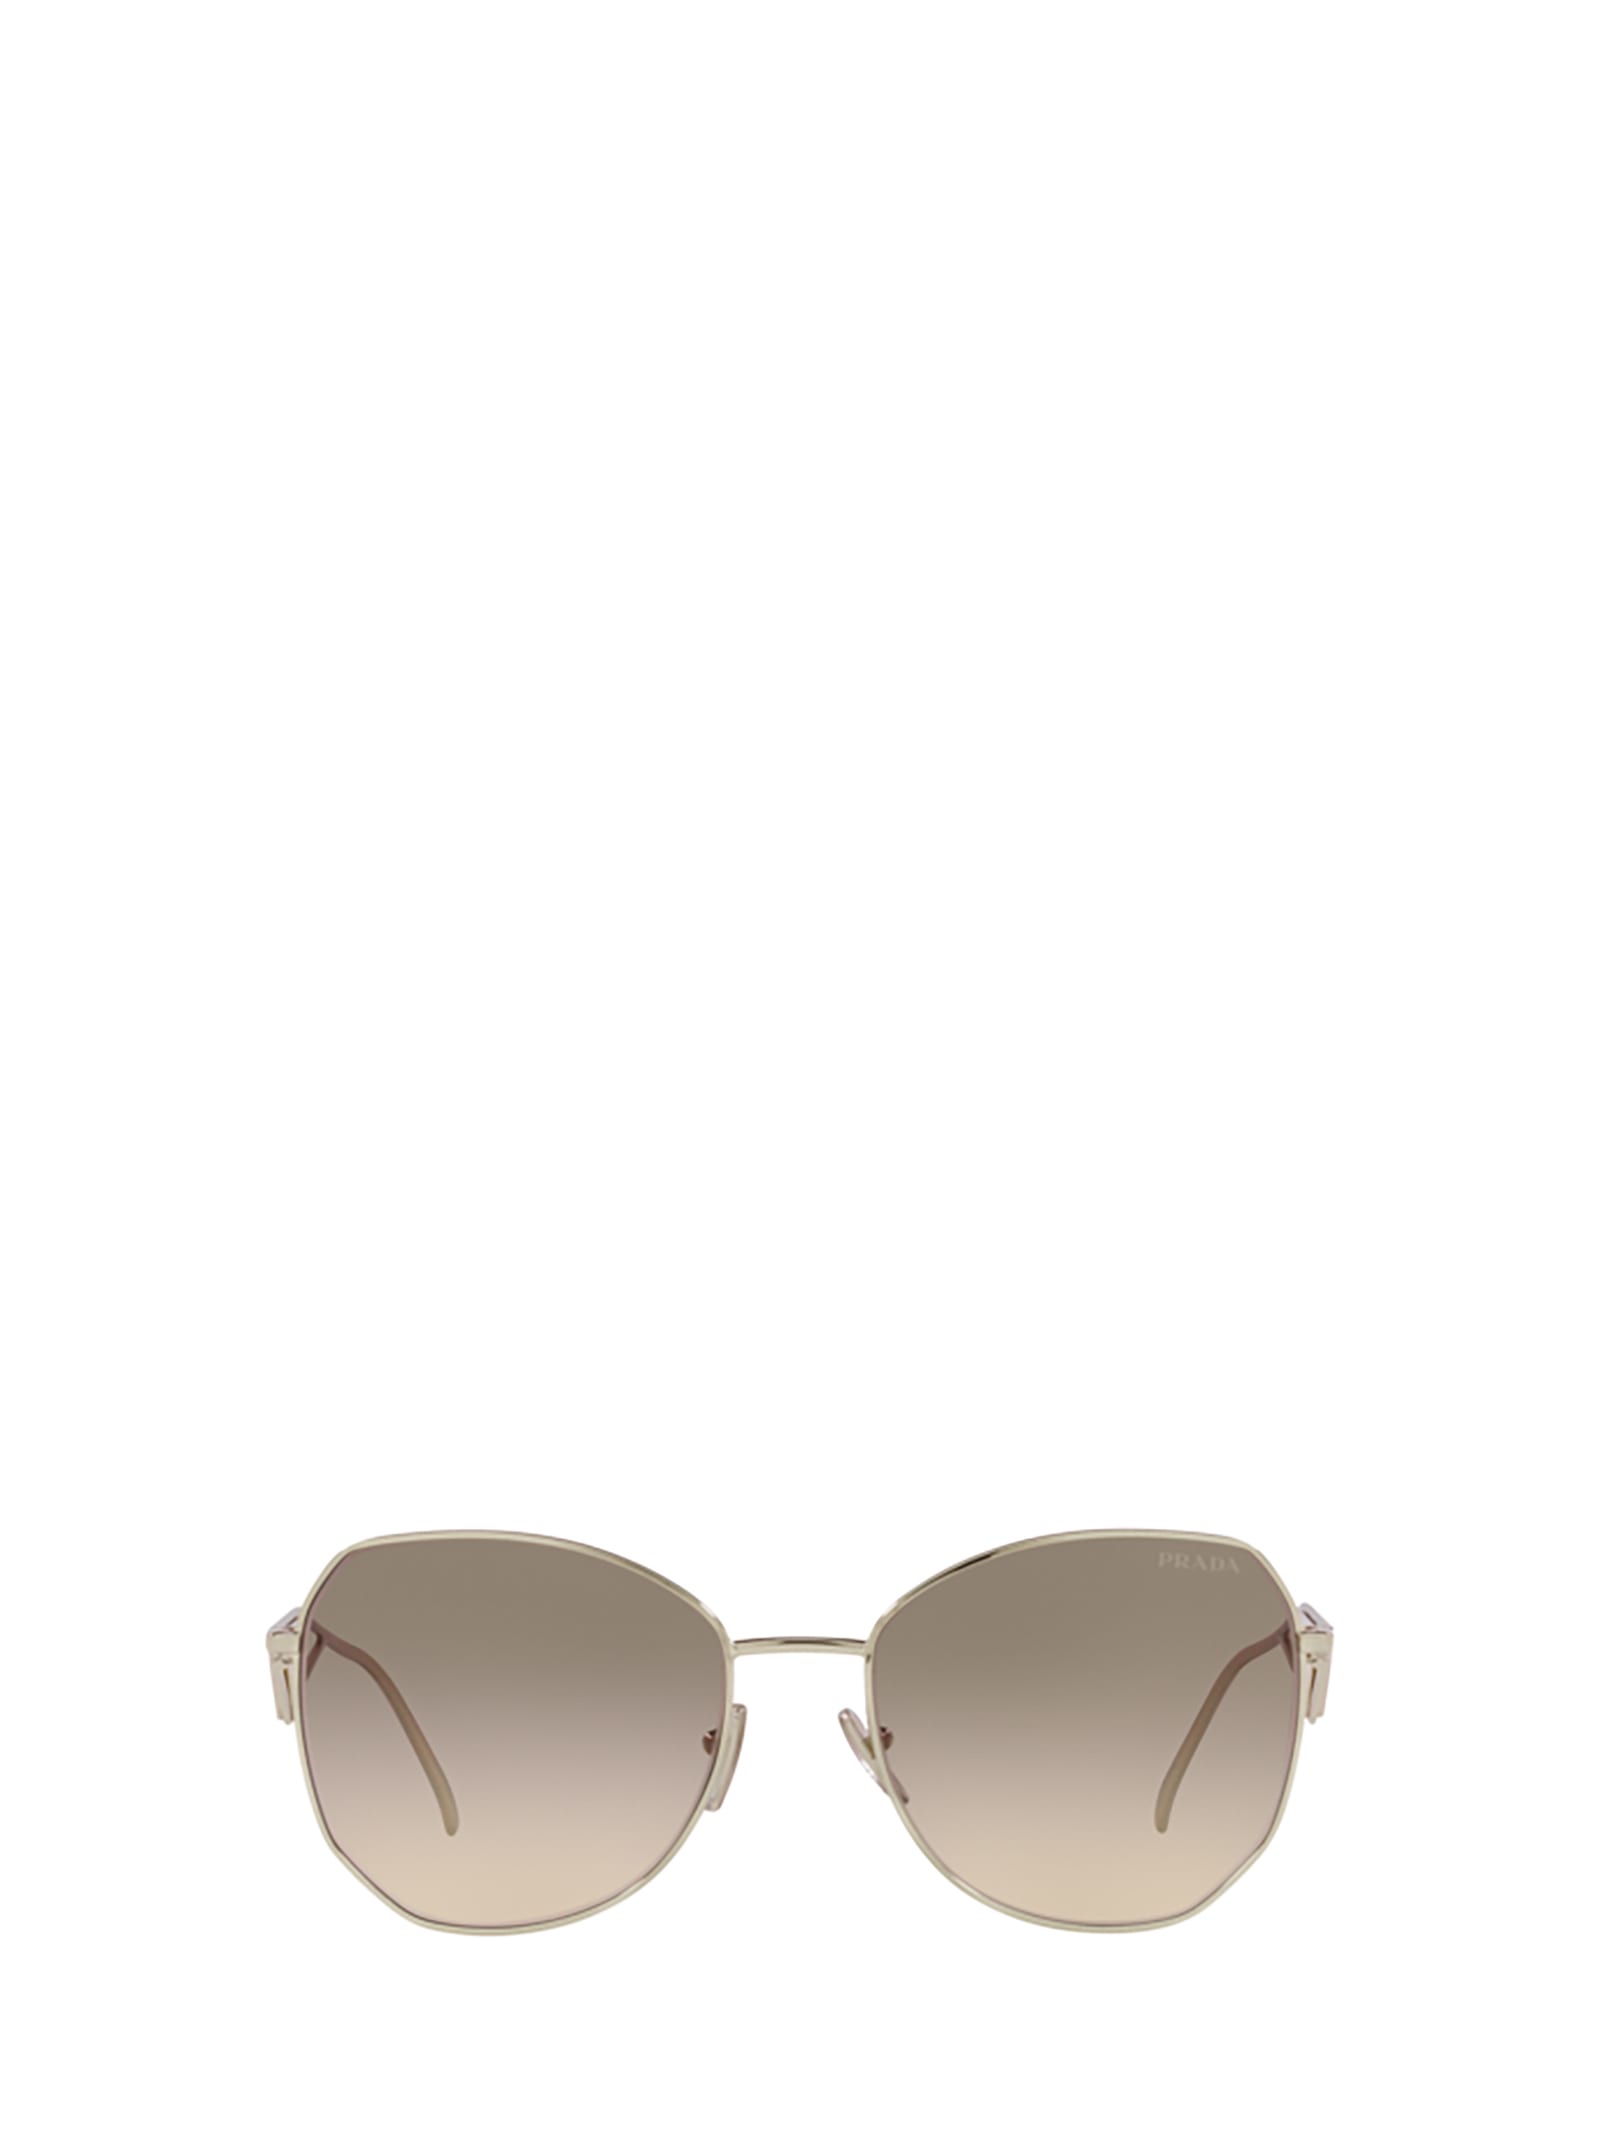 Prada Pr 57ys Pale Gold Sunglasses